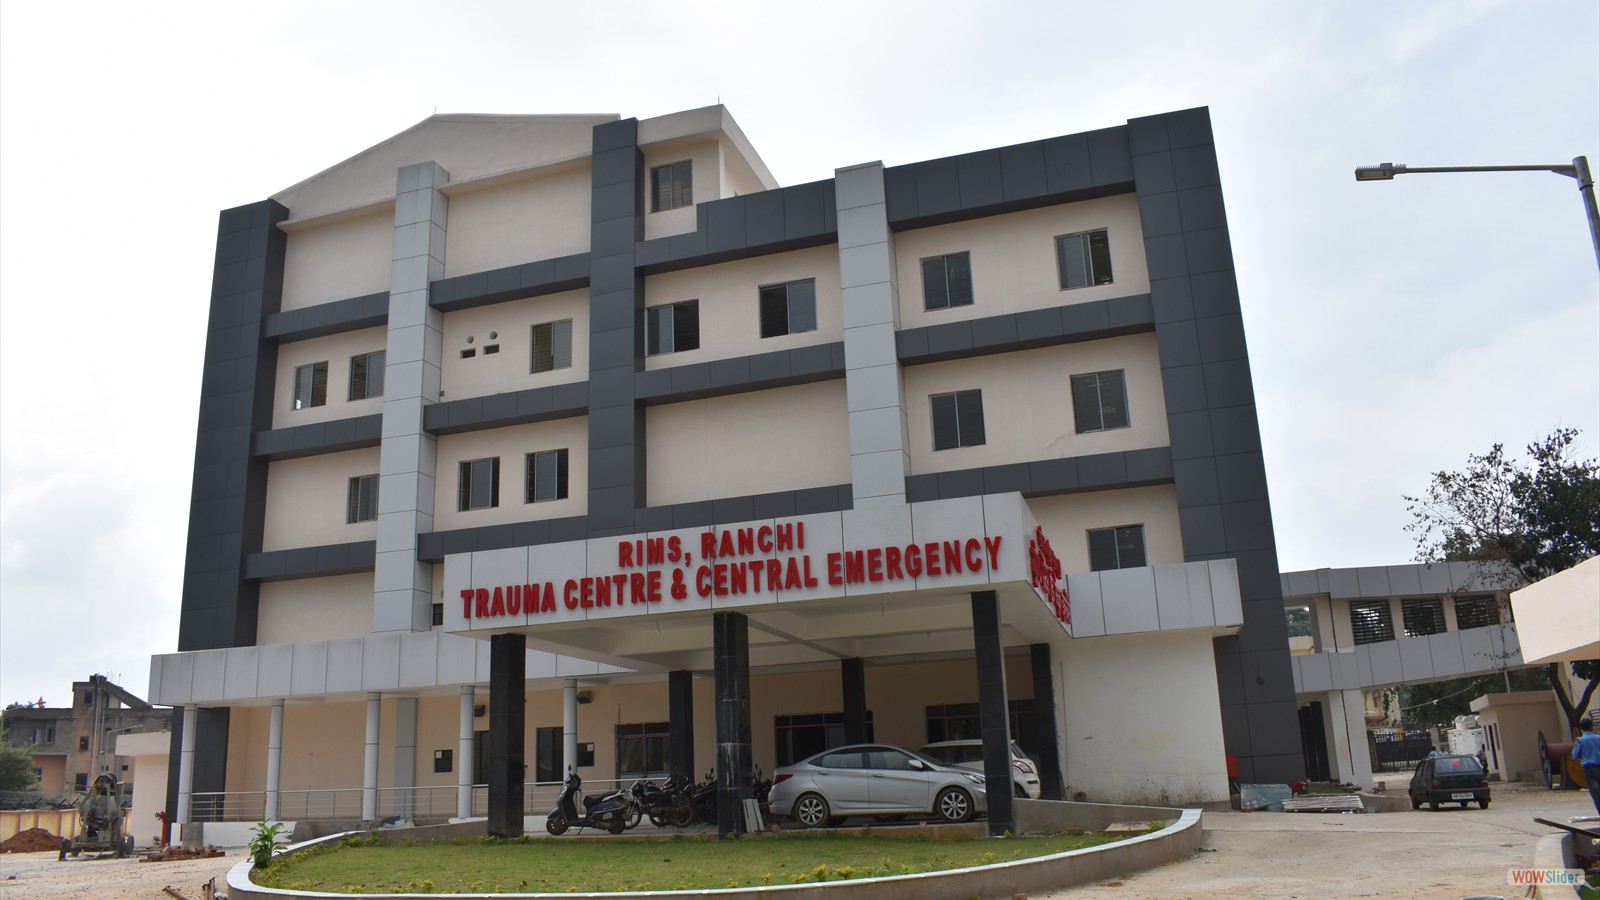 Trauma Centre & Central Emergency, RIMS Ranchi